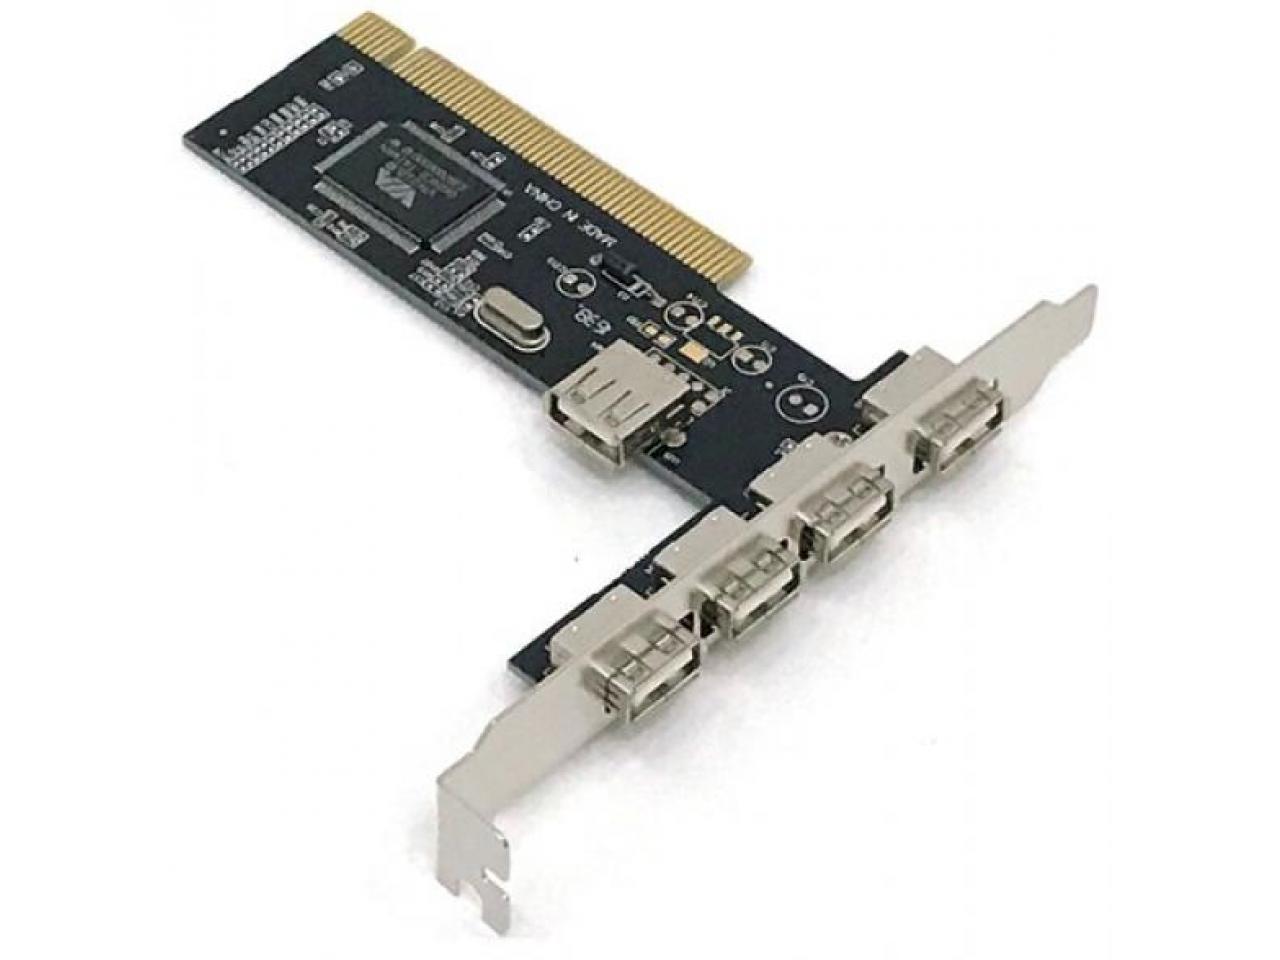 Dex Placa PCI USB 2.0 com 5 Portas (4 Externas + 1 Interna)